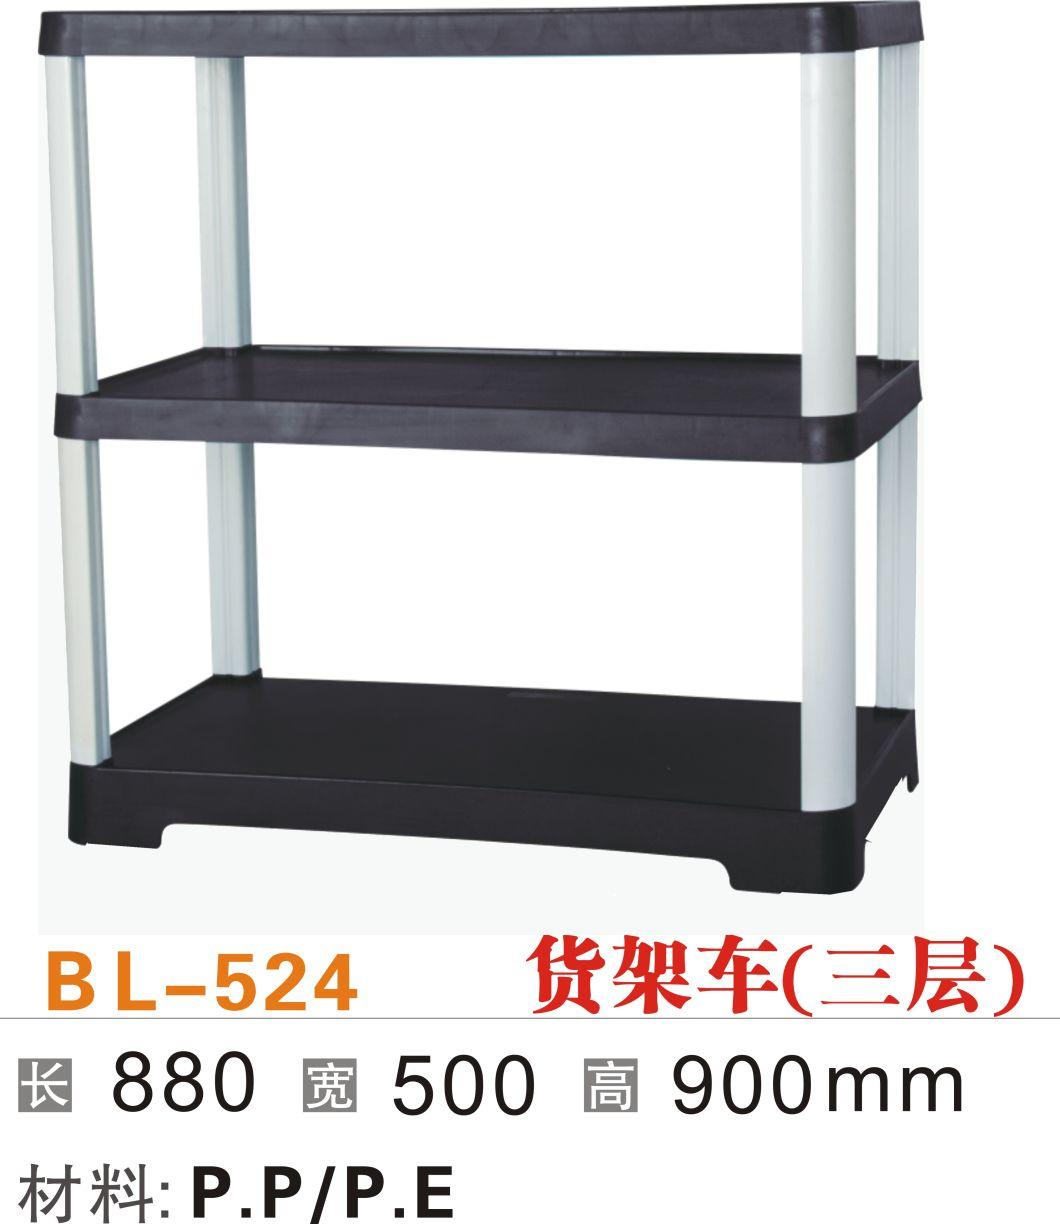 Three Shelves of Supermarket Bl-524